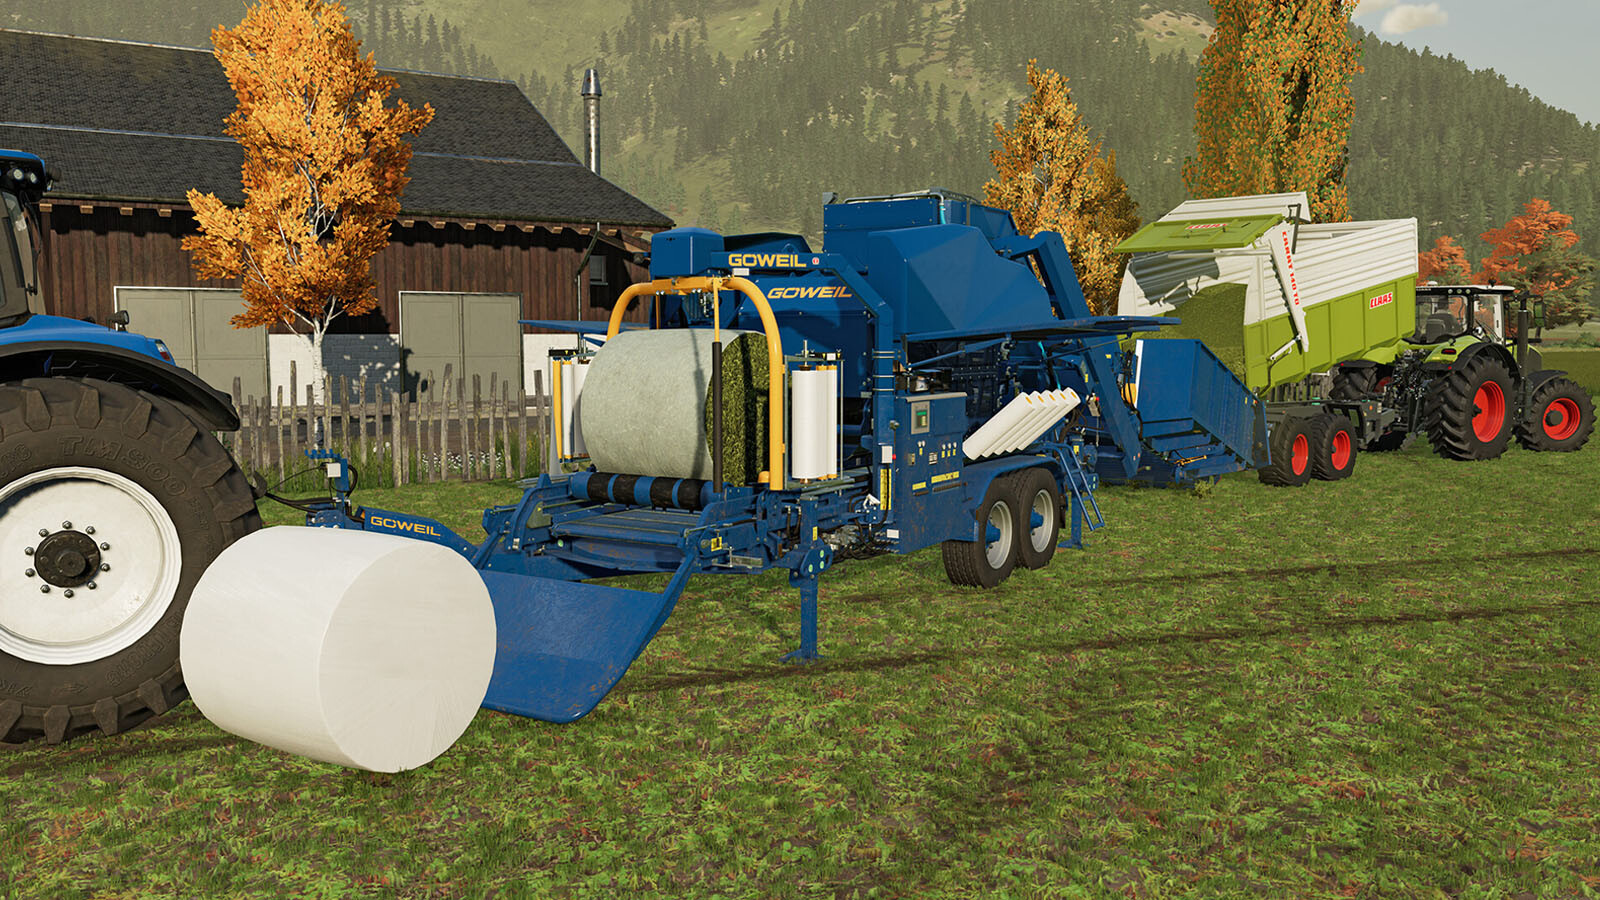 Farming Simulator 22 - Year 1 Season Pass Steam Key für PC und Mac